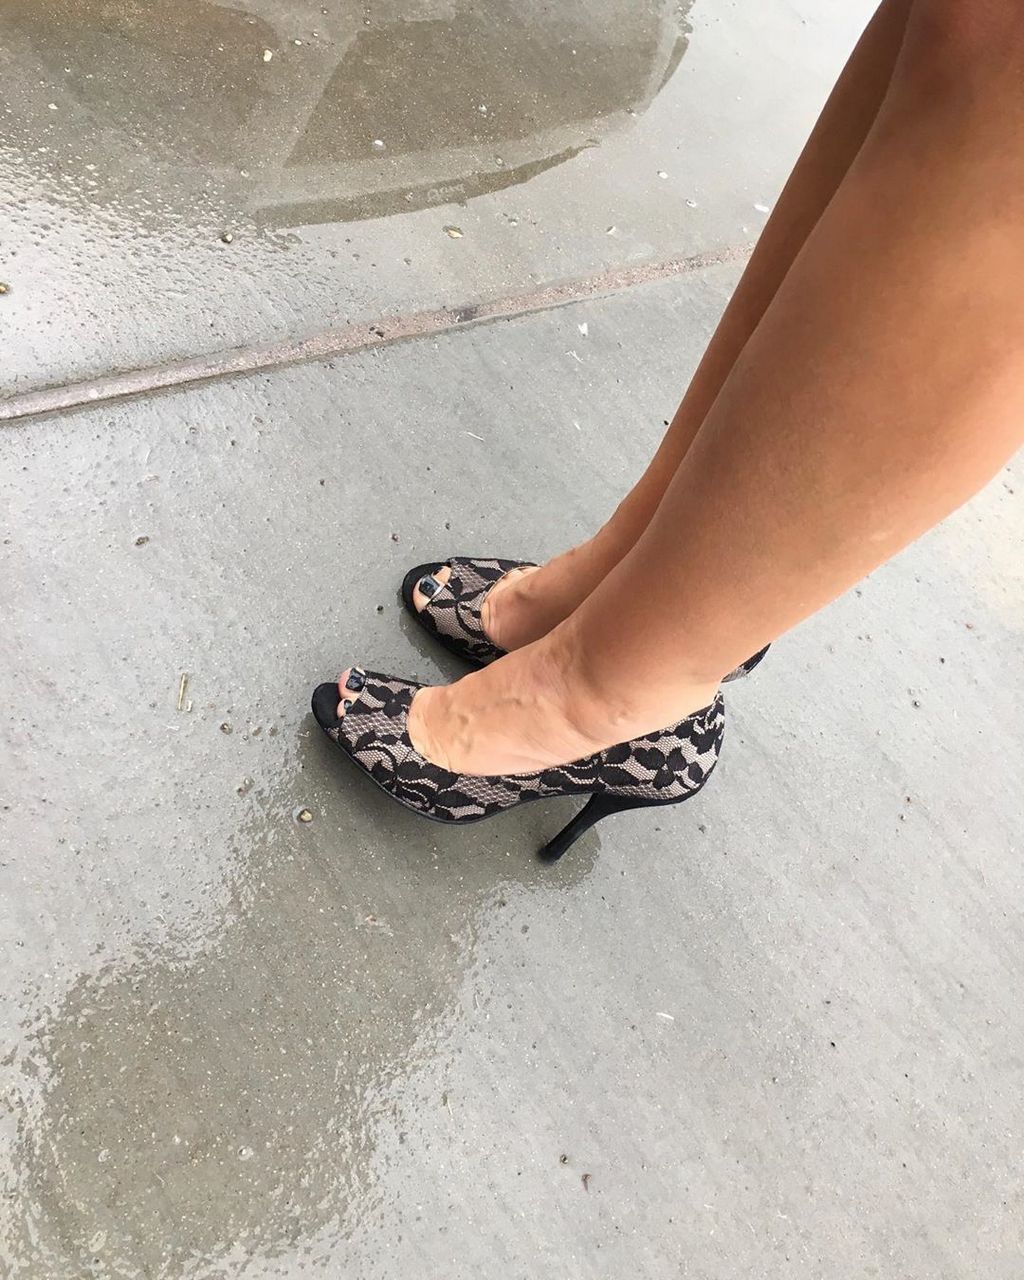 Brooke Wagner Feet